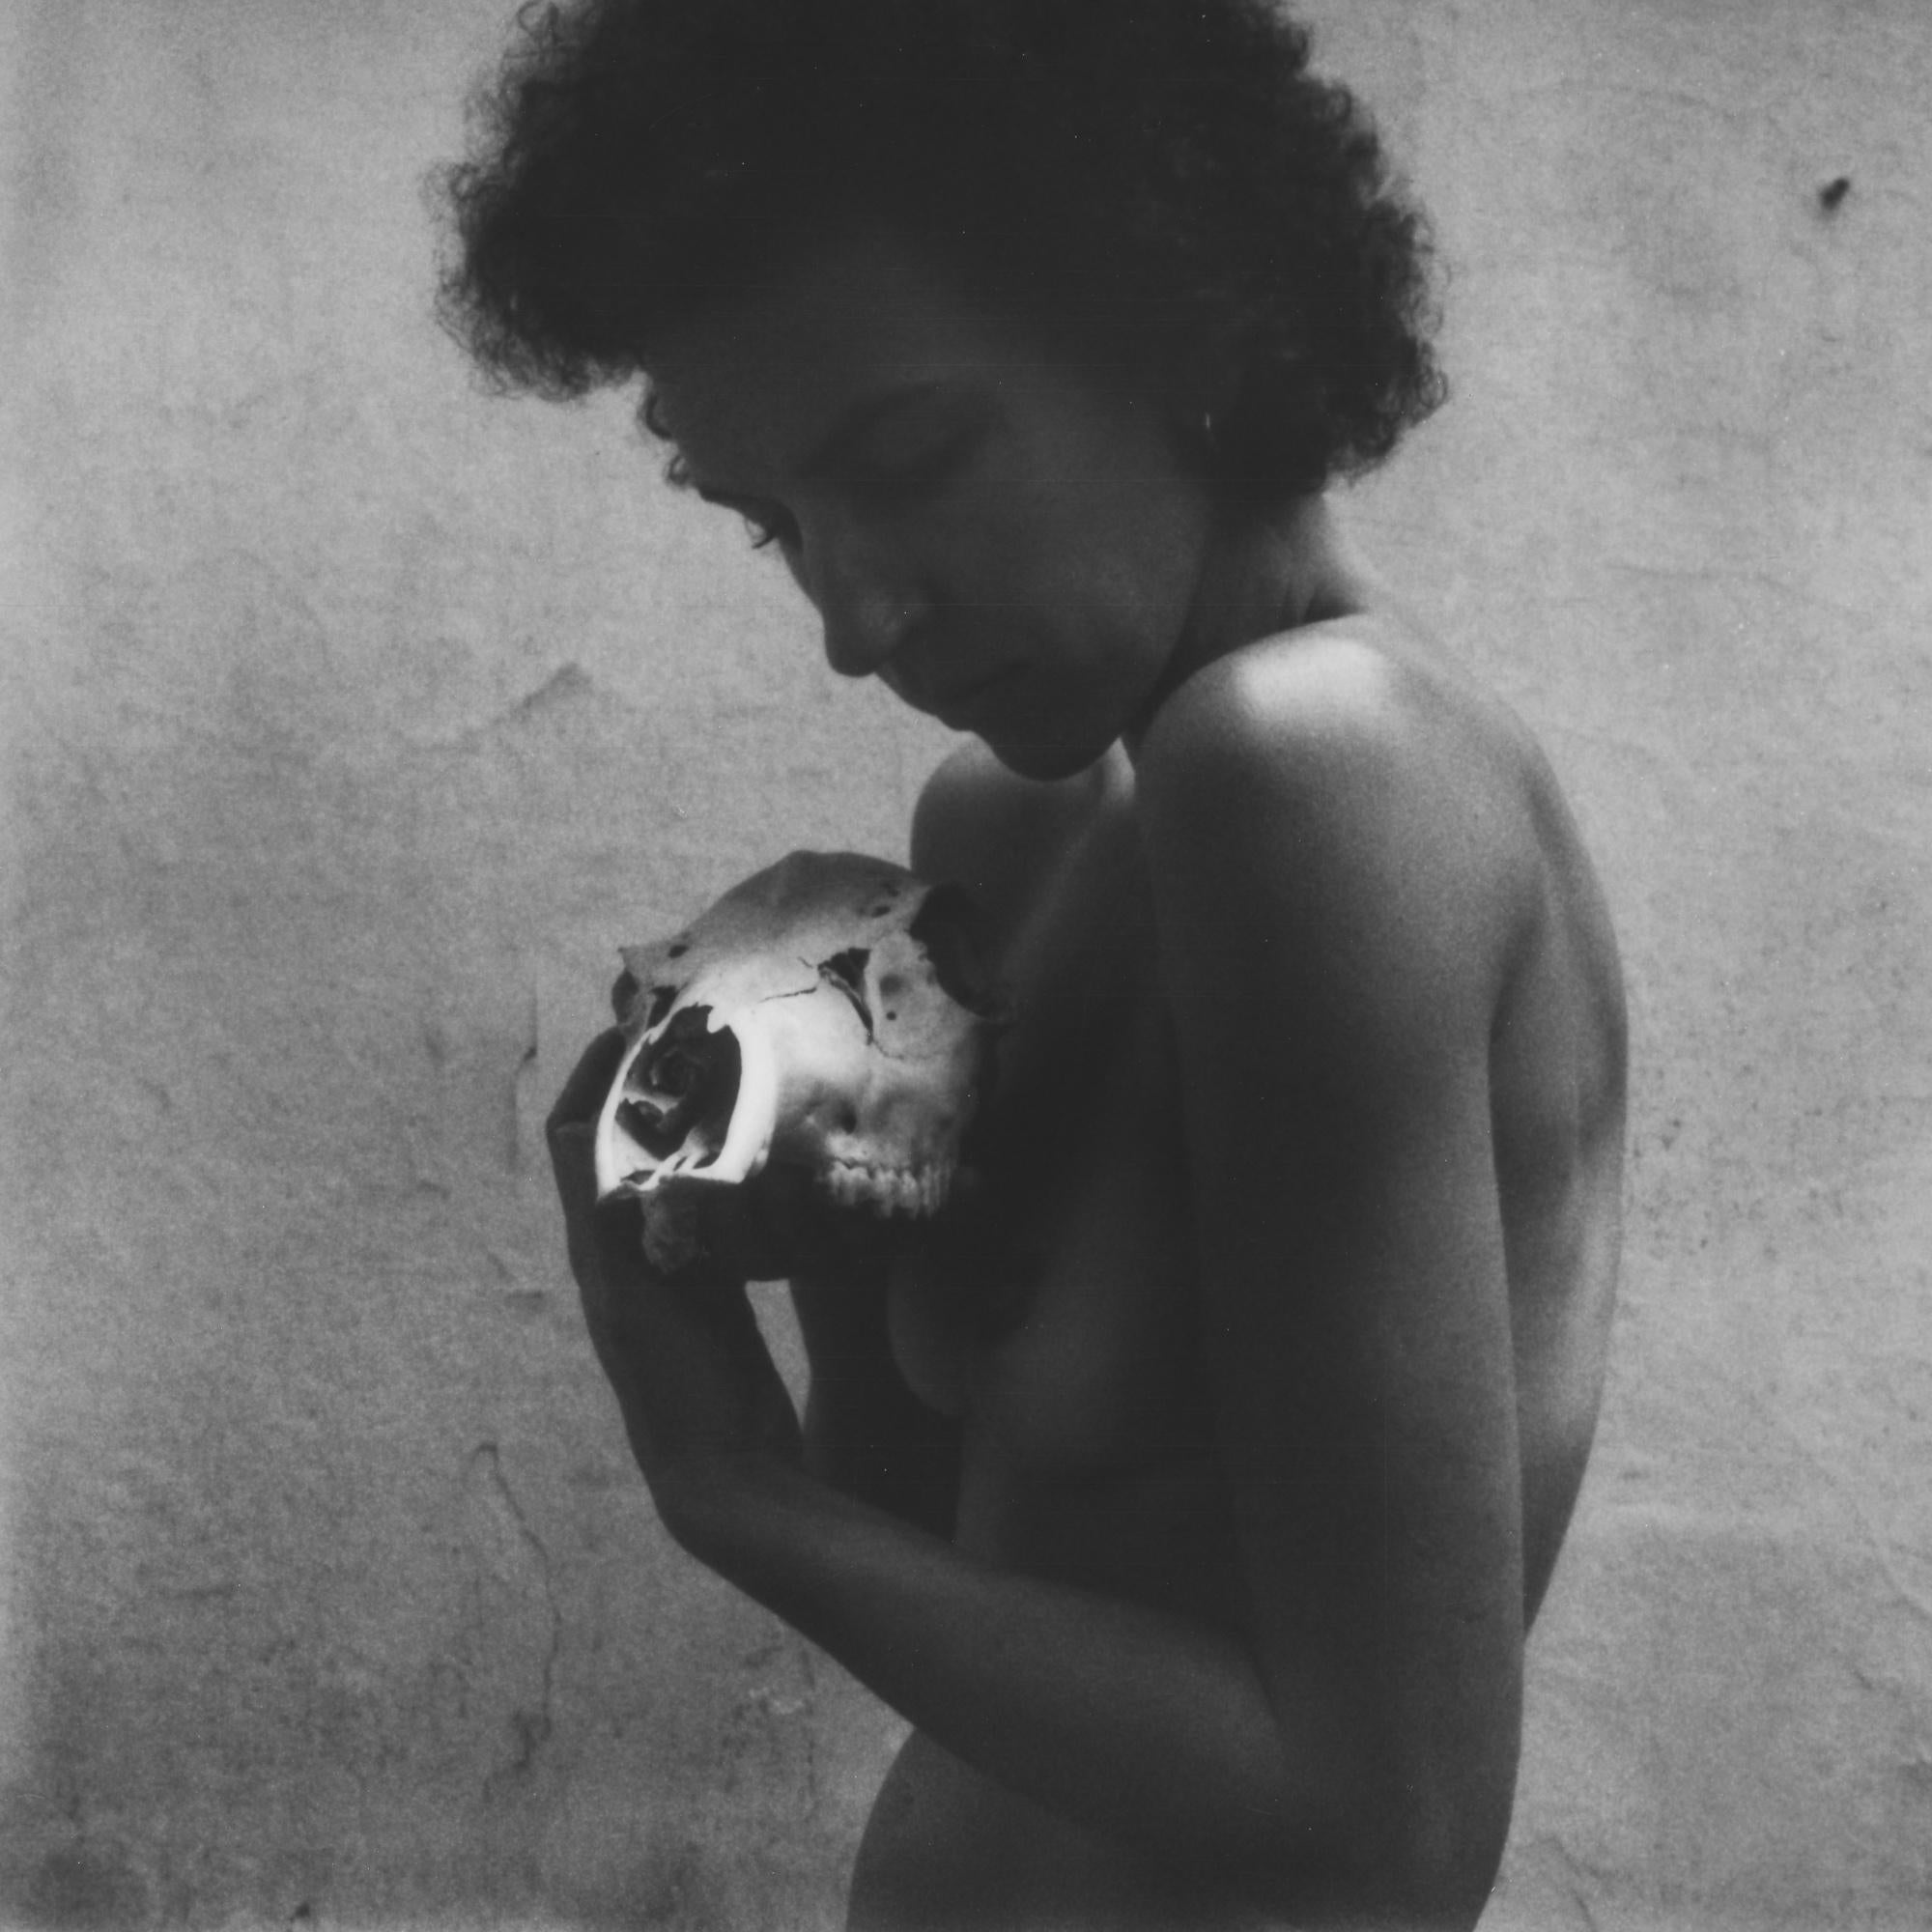 Skin and Bones I, 21st Century, Polaroid, Nude Photography, Contemporary, B&W